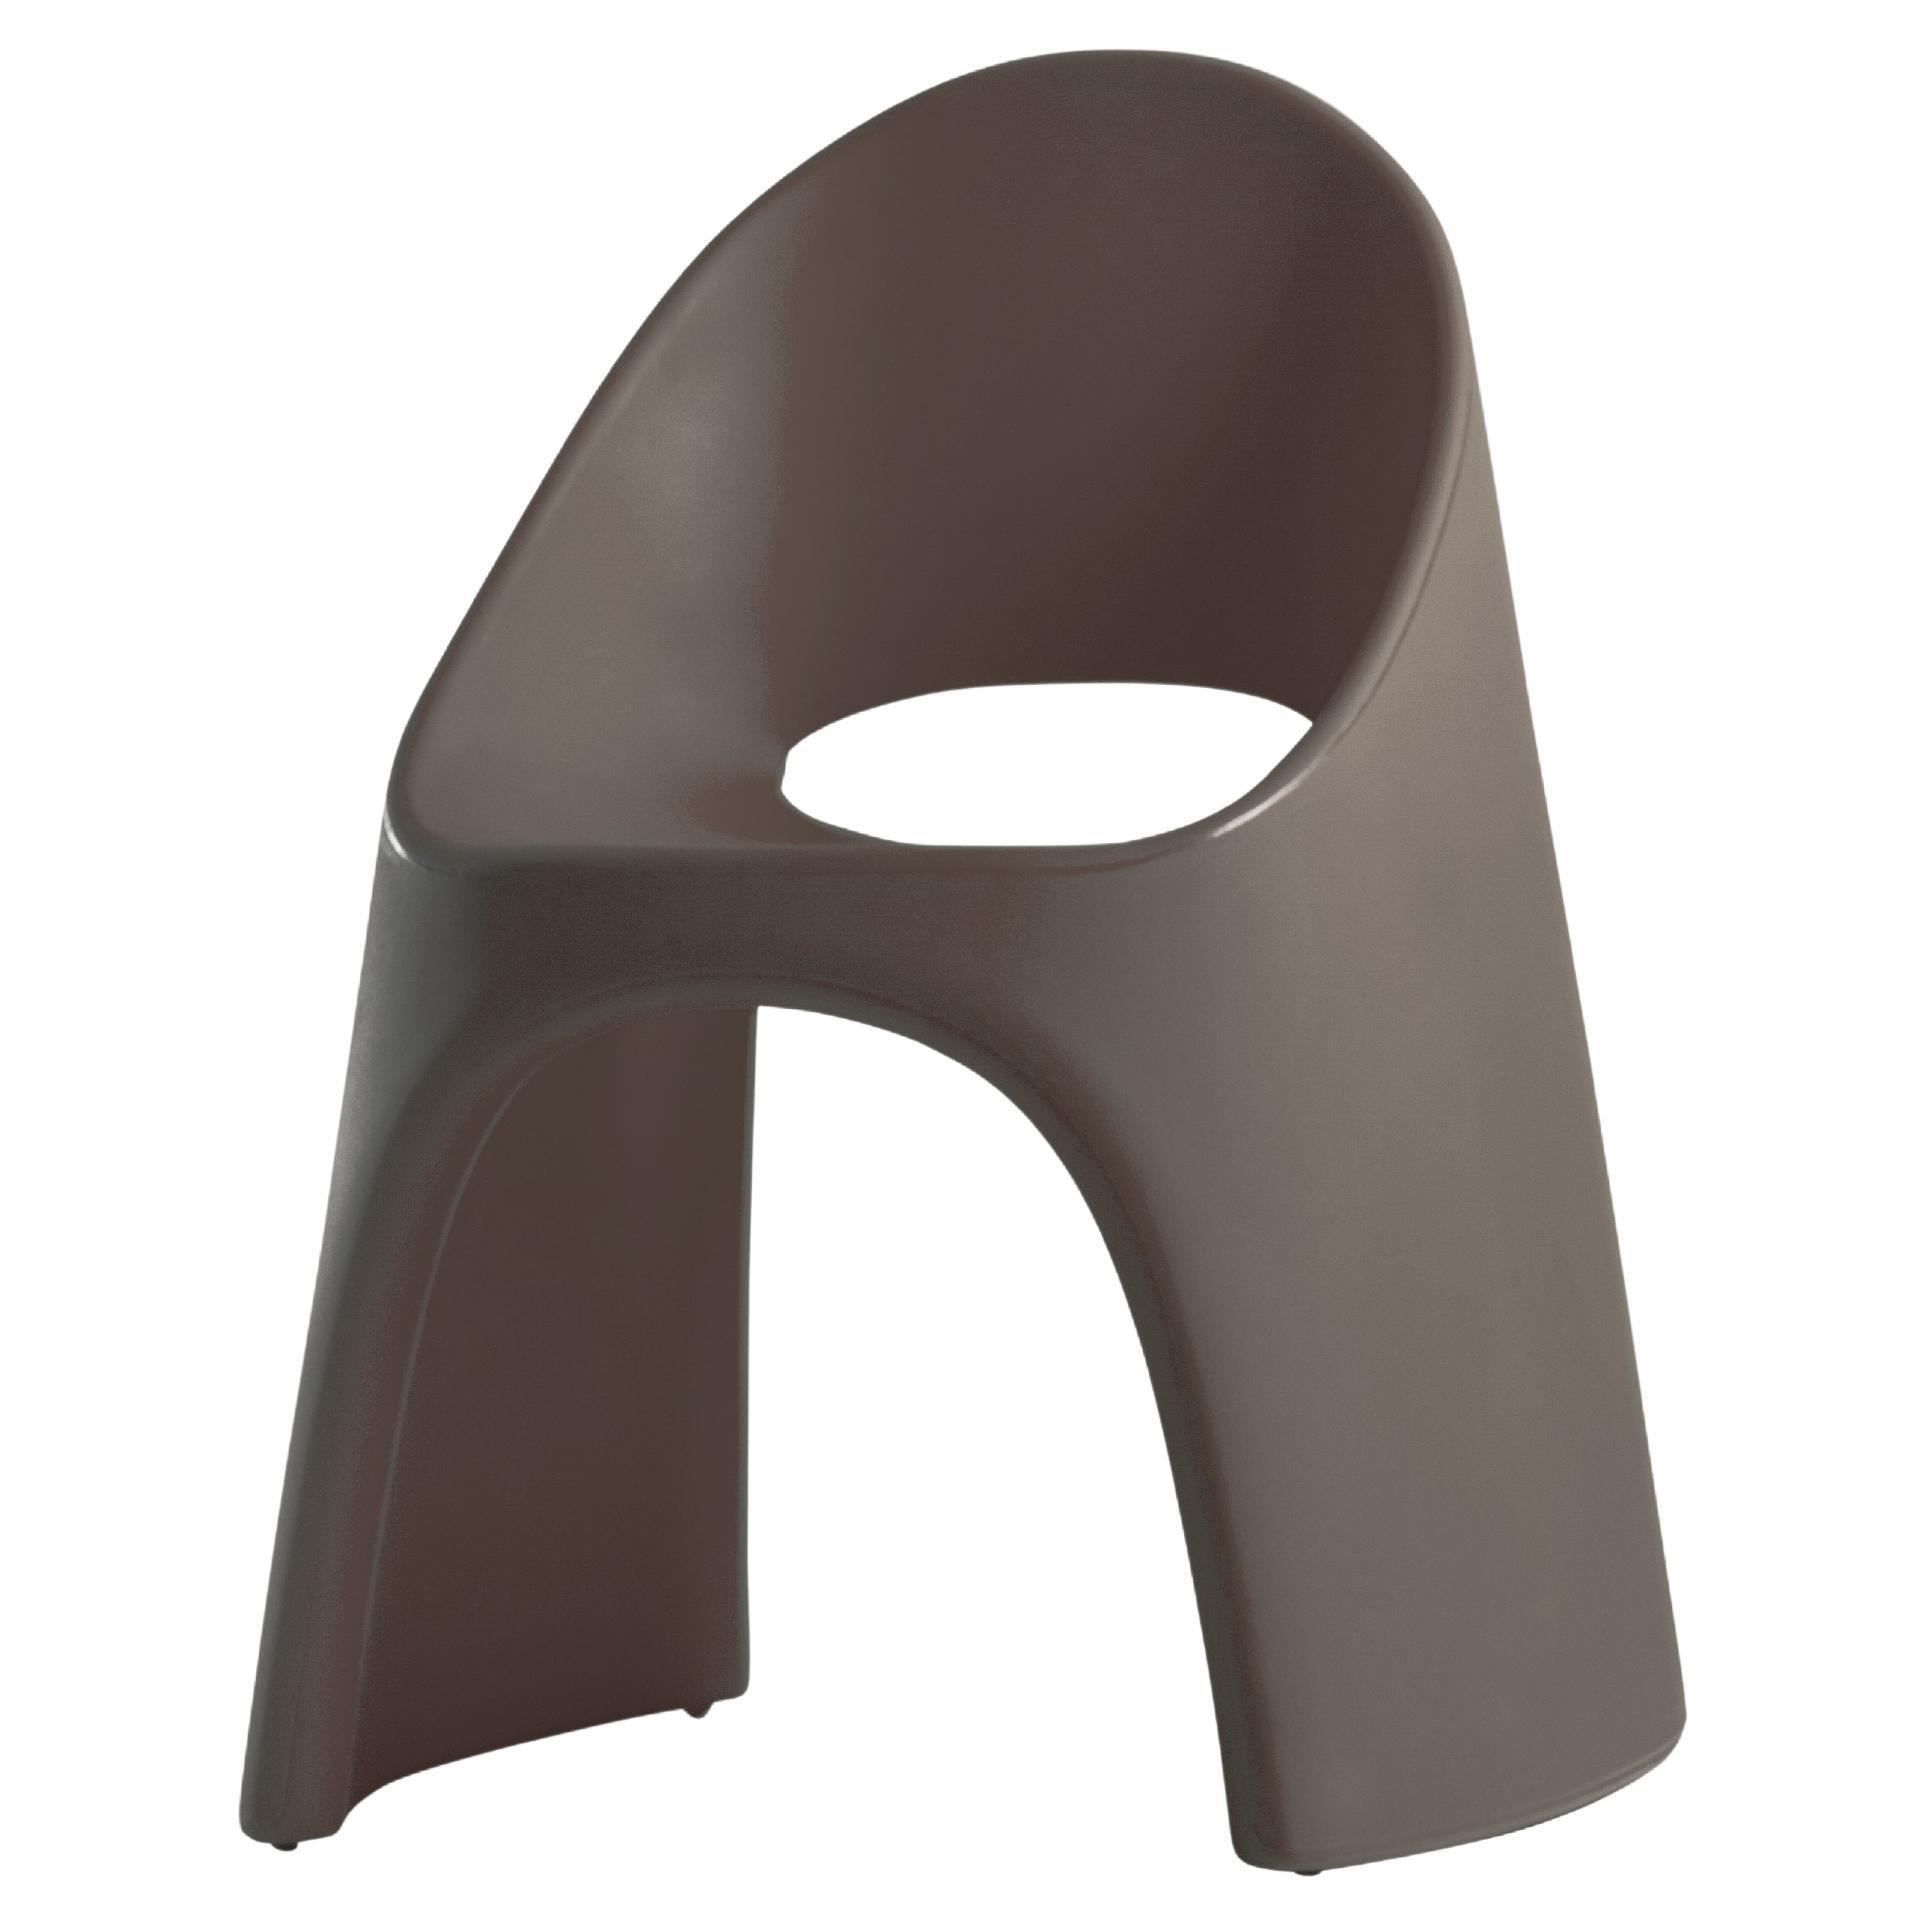 Slide Design Amélie Chair in Chocolate Brown by Italo Pertichini